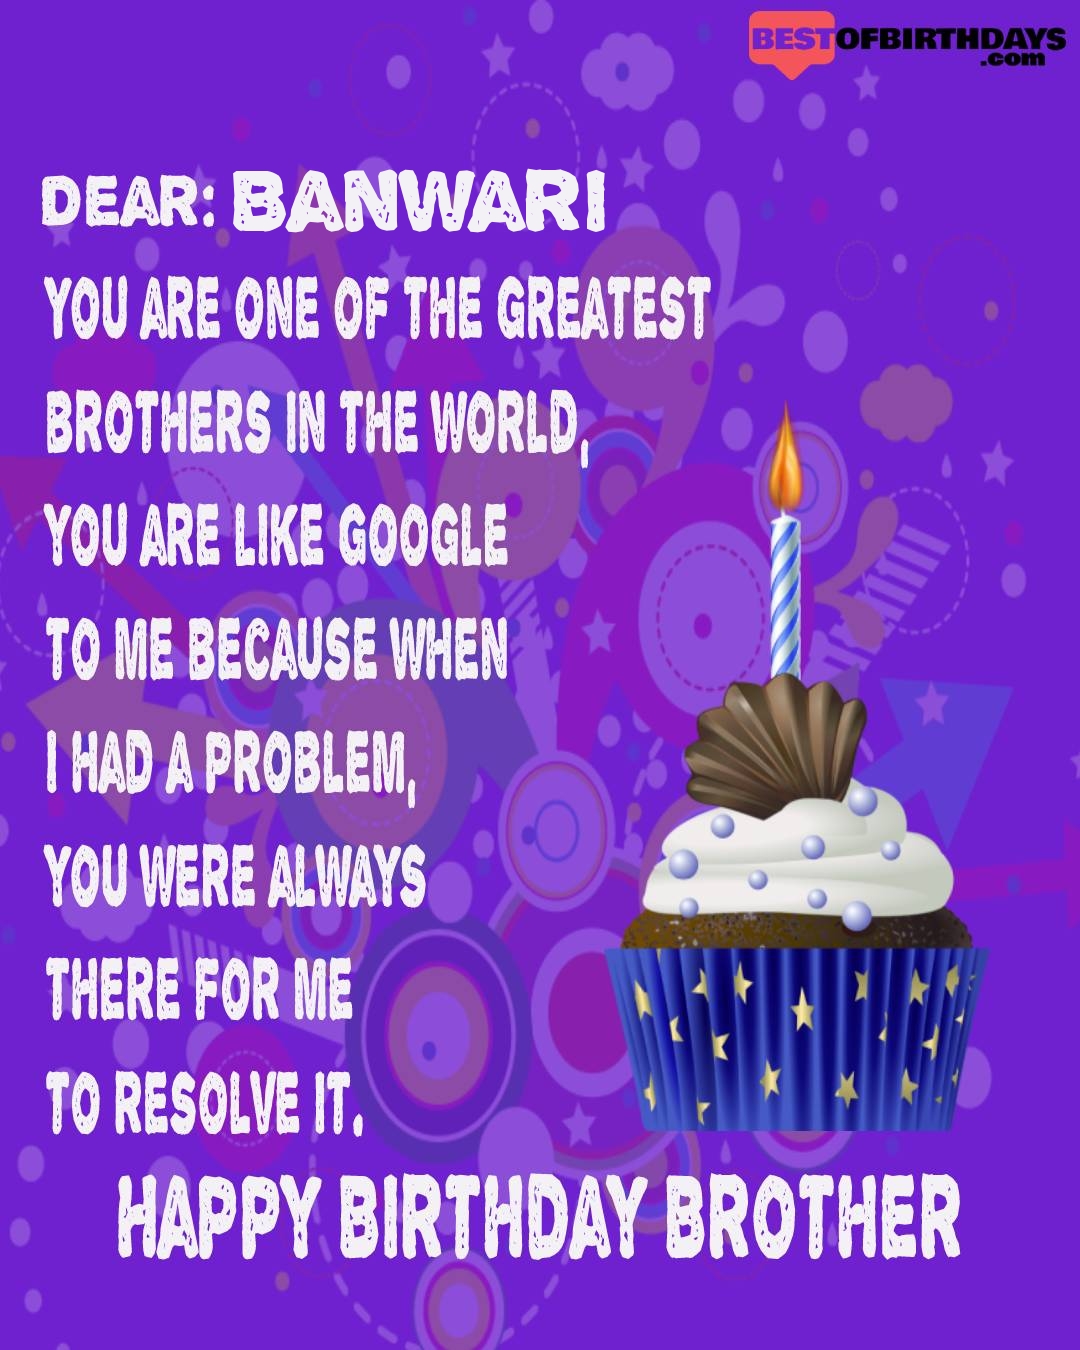 Happy birthday banwari bhai brother bro